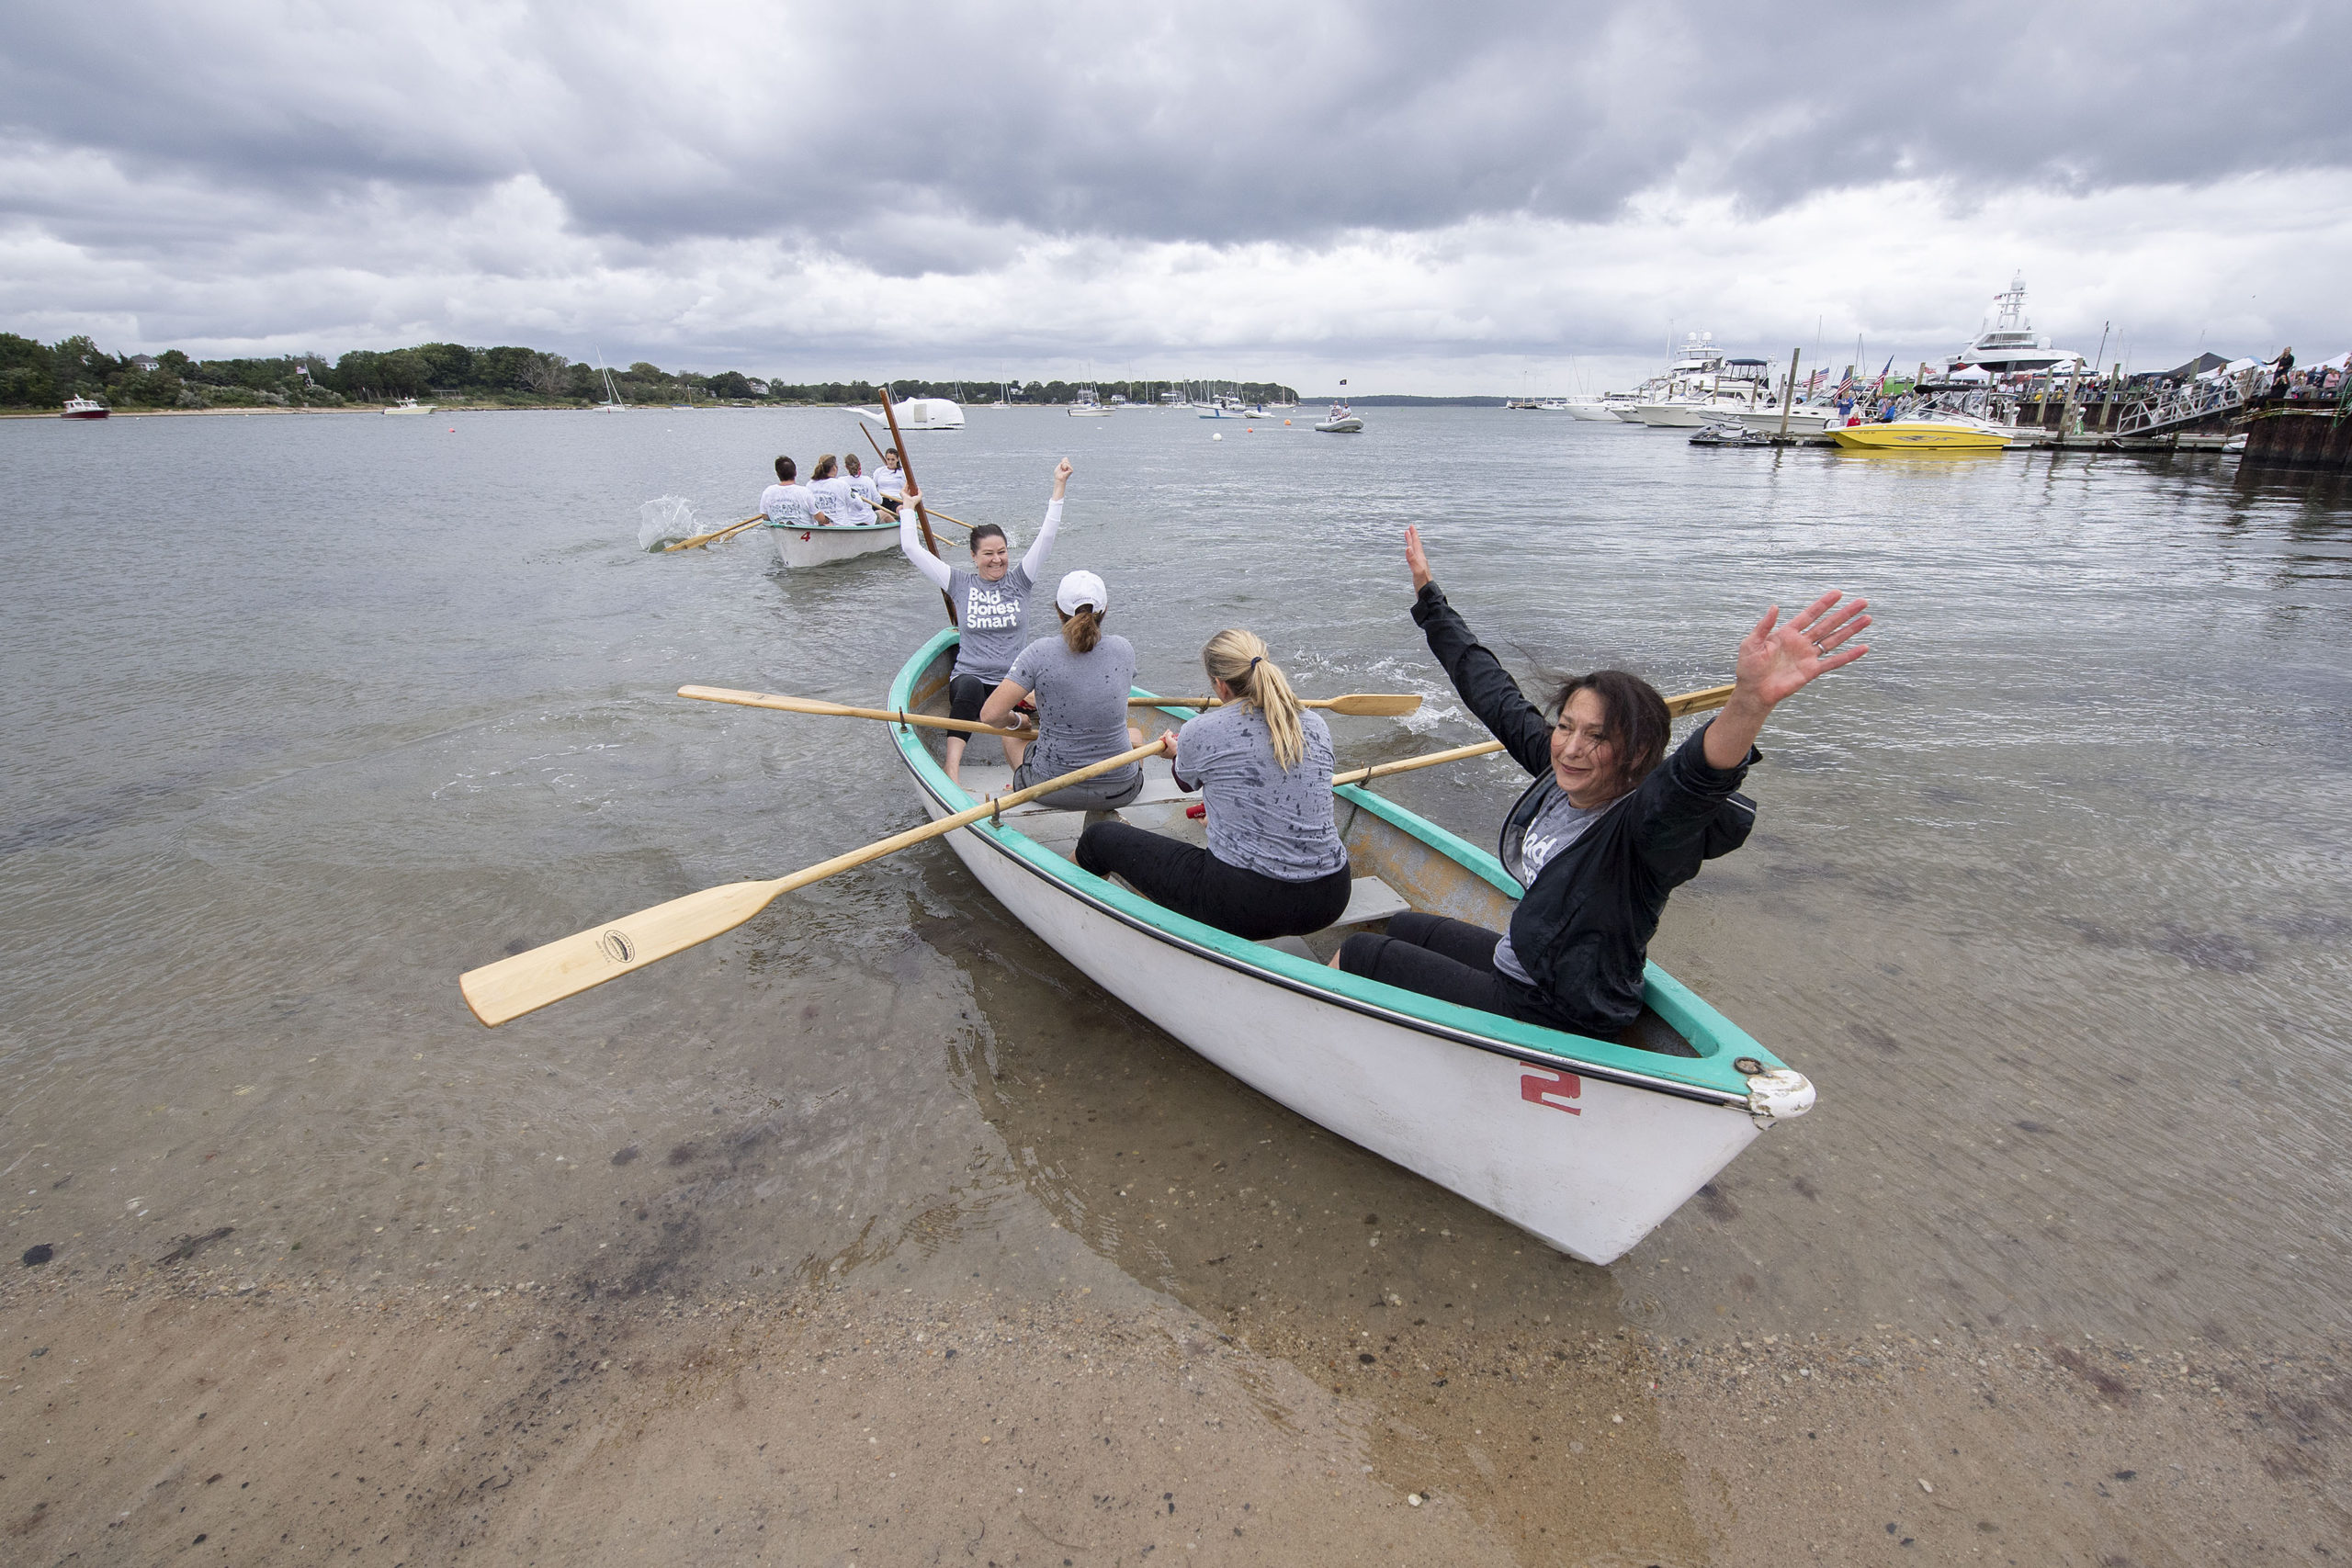 Whaleboat races return this weekend in Sag Harbor at the Sag Harbor Chamber of Commerce HarborFest weekend.